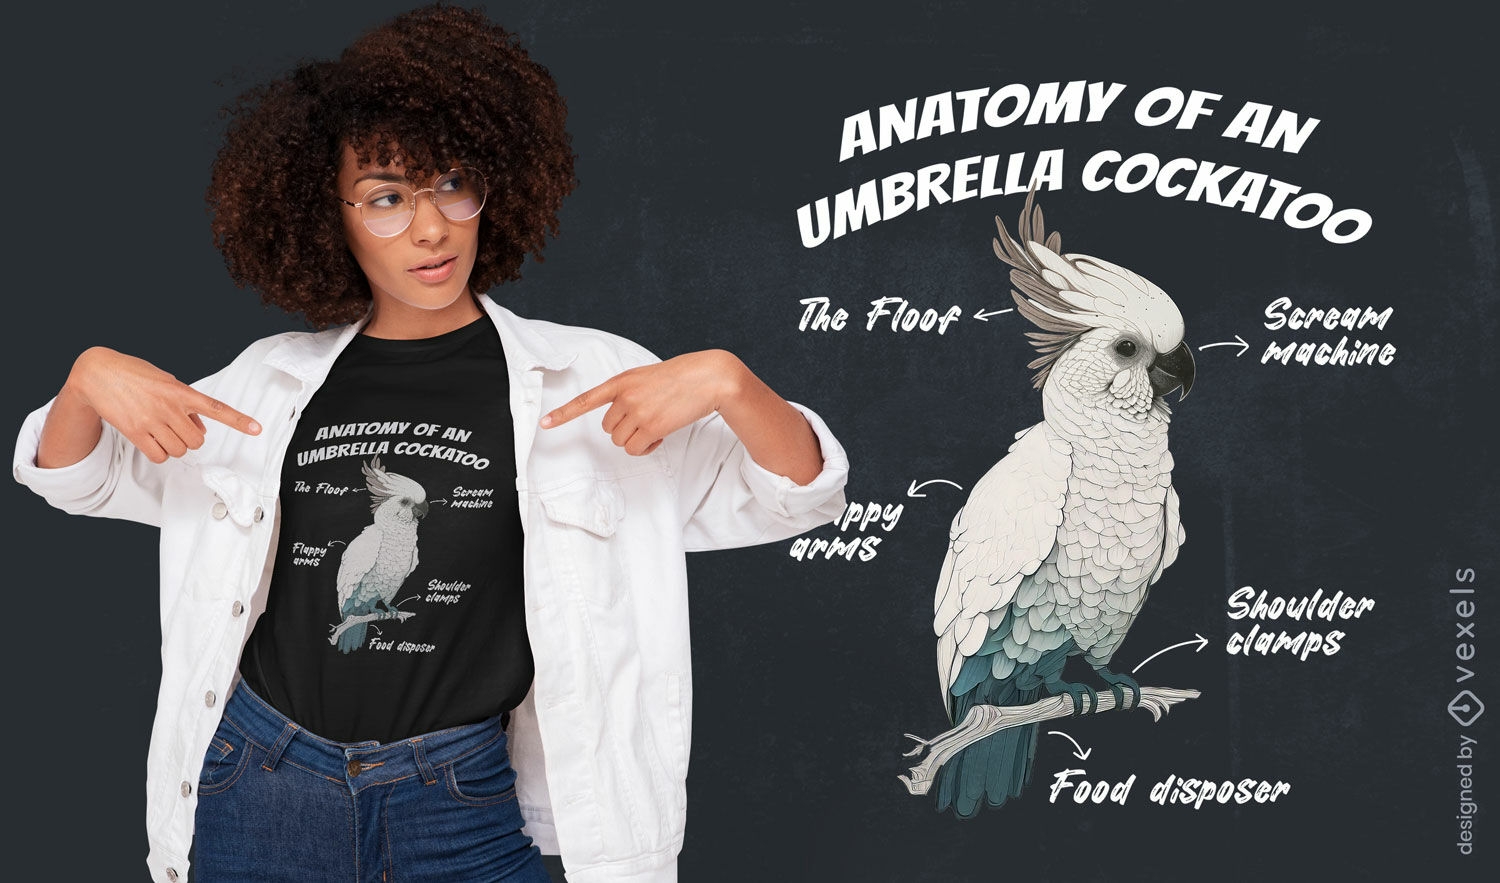 Umbrella cockatoo anatomy t-shirt design